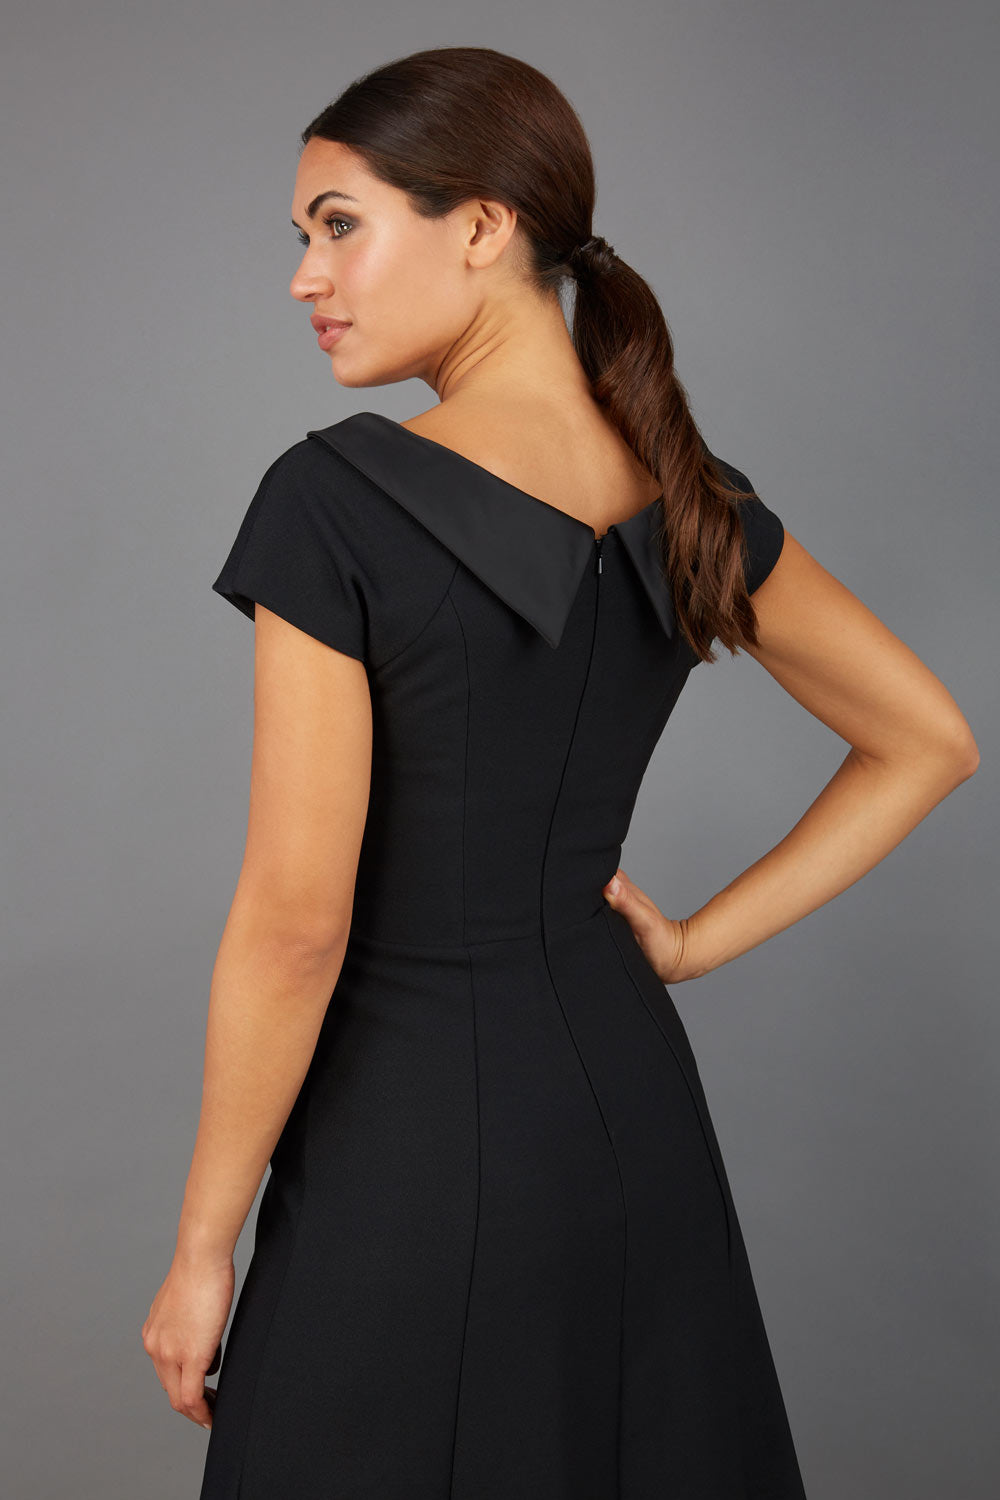 model wearing a diva catwalk Bowmore V-Neck A-line Dress cap sleeve in black colour